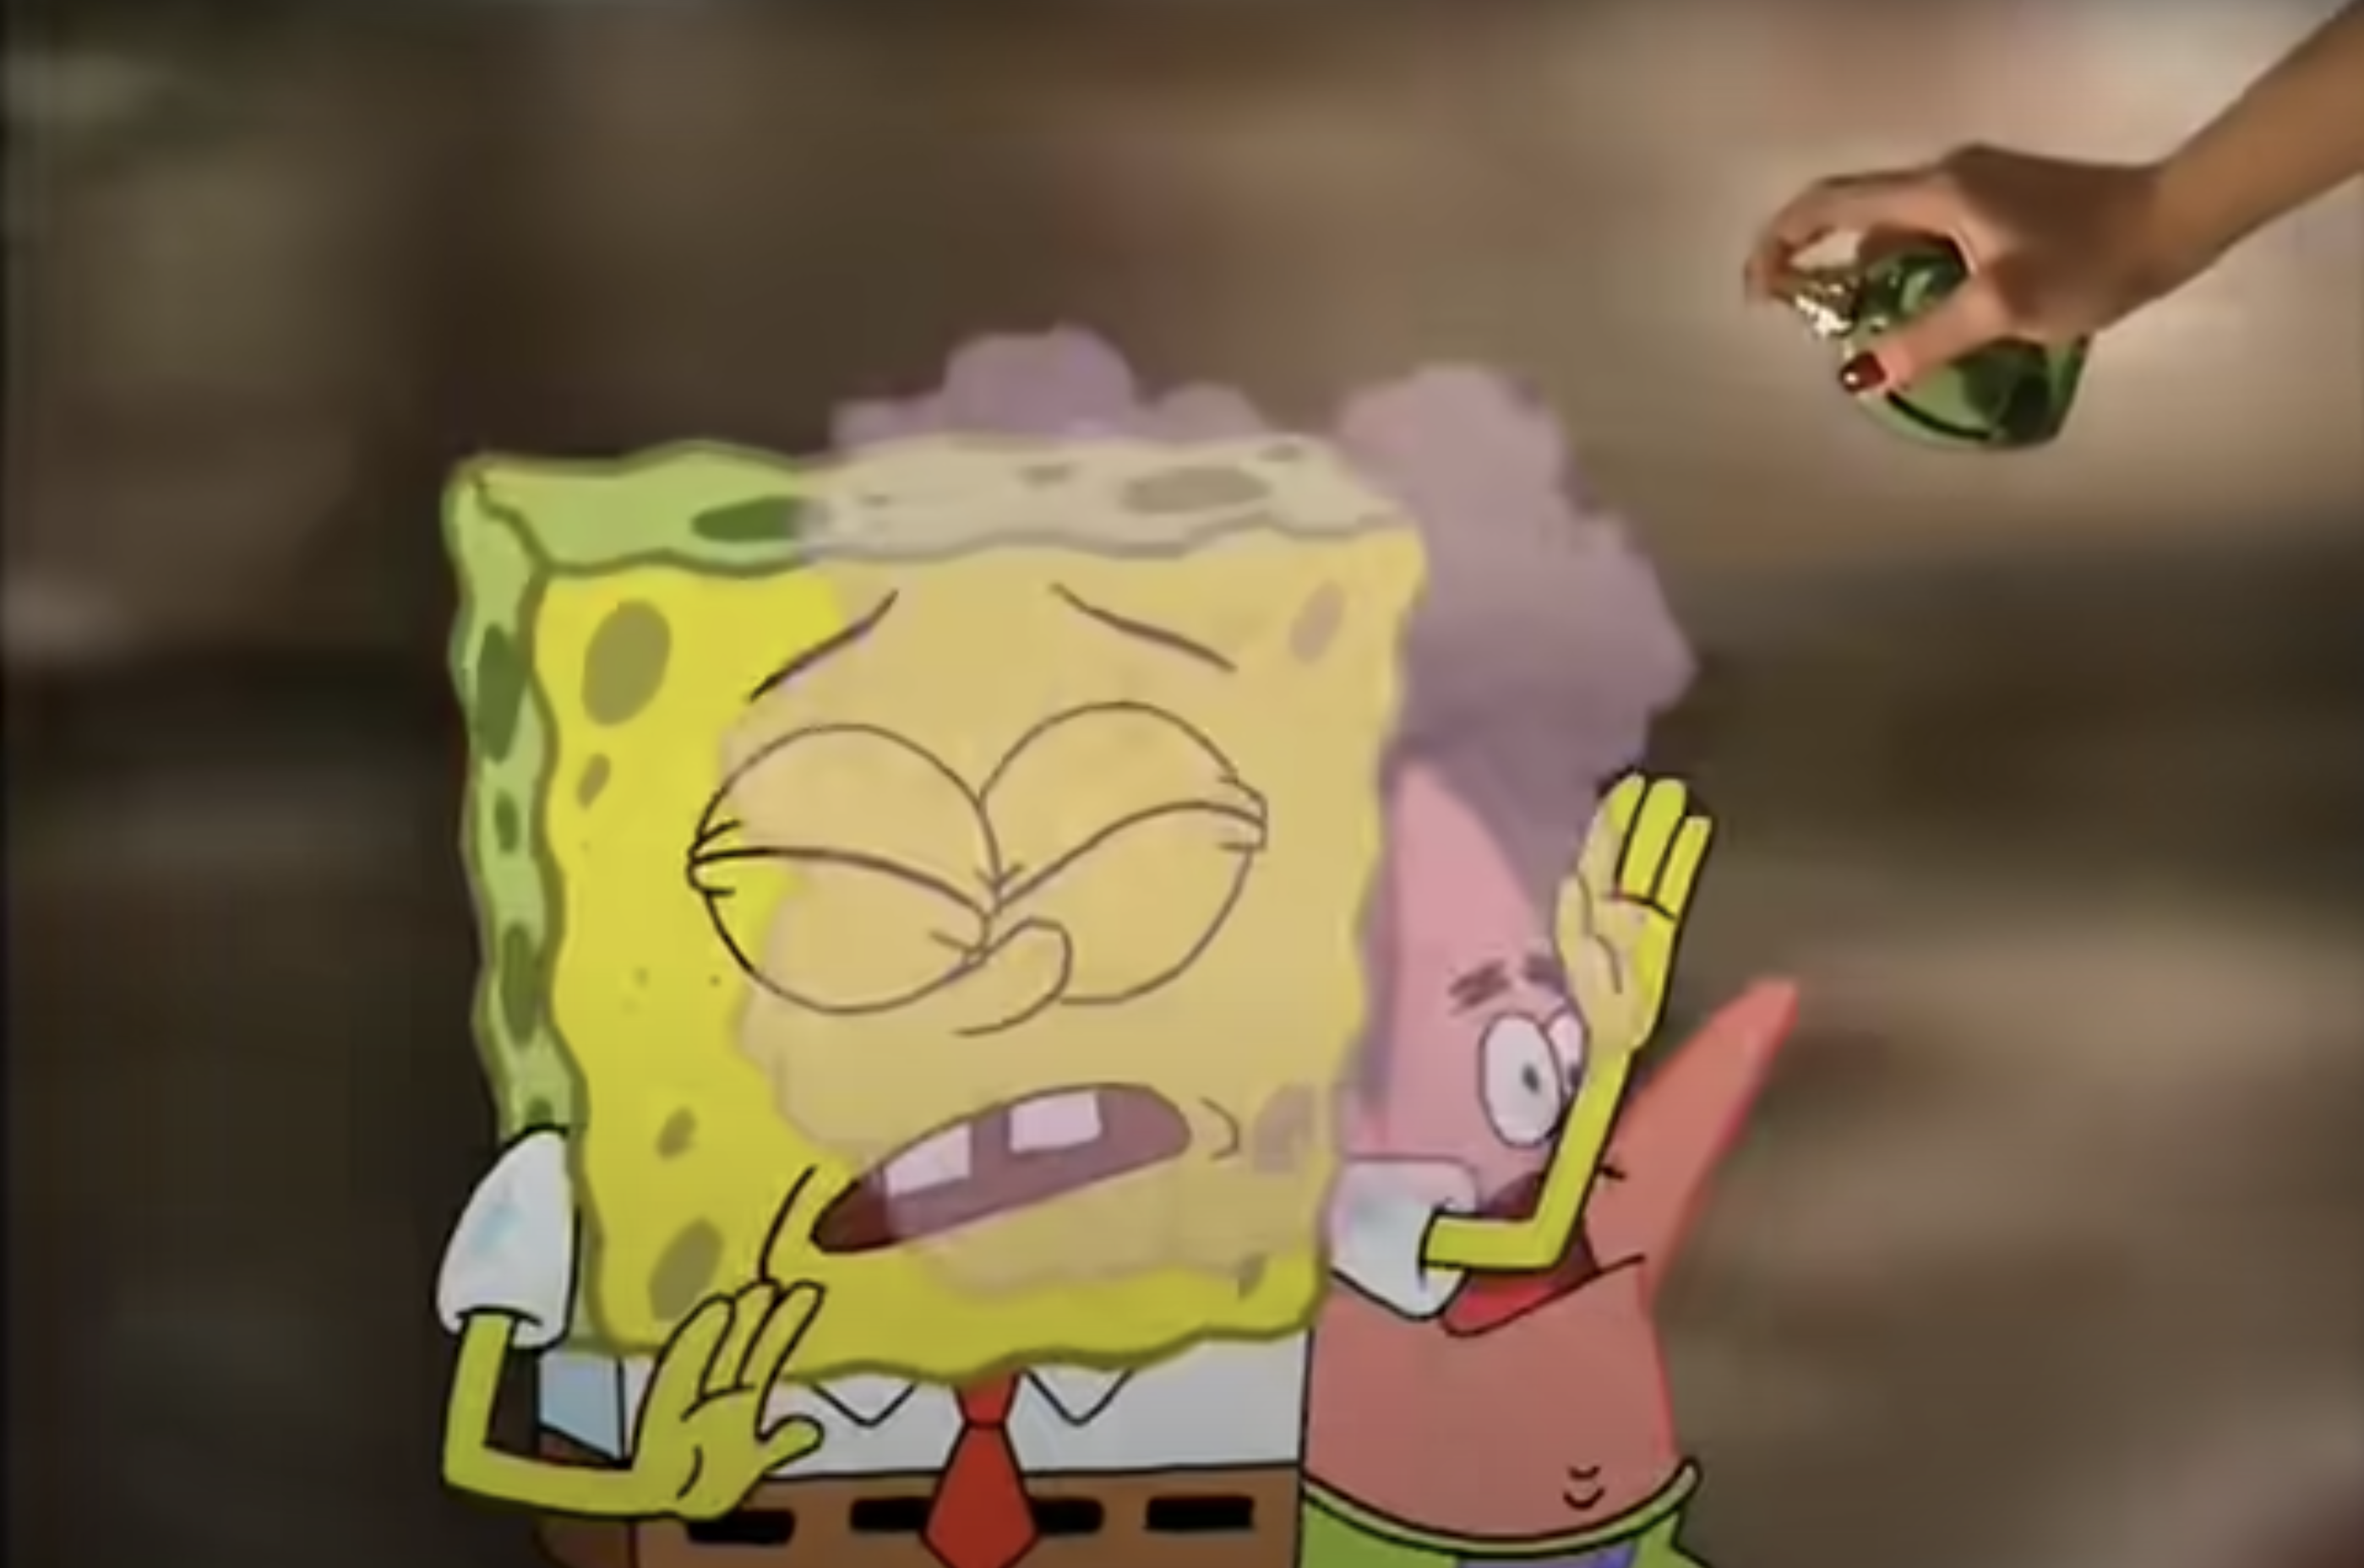 Spongebob and Patrick are sprayed with perfume in &quot;Spongebob Squarepants&quot;